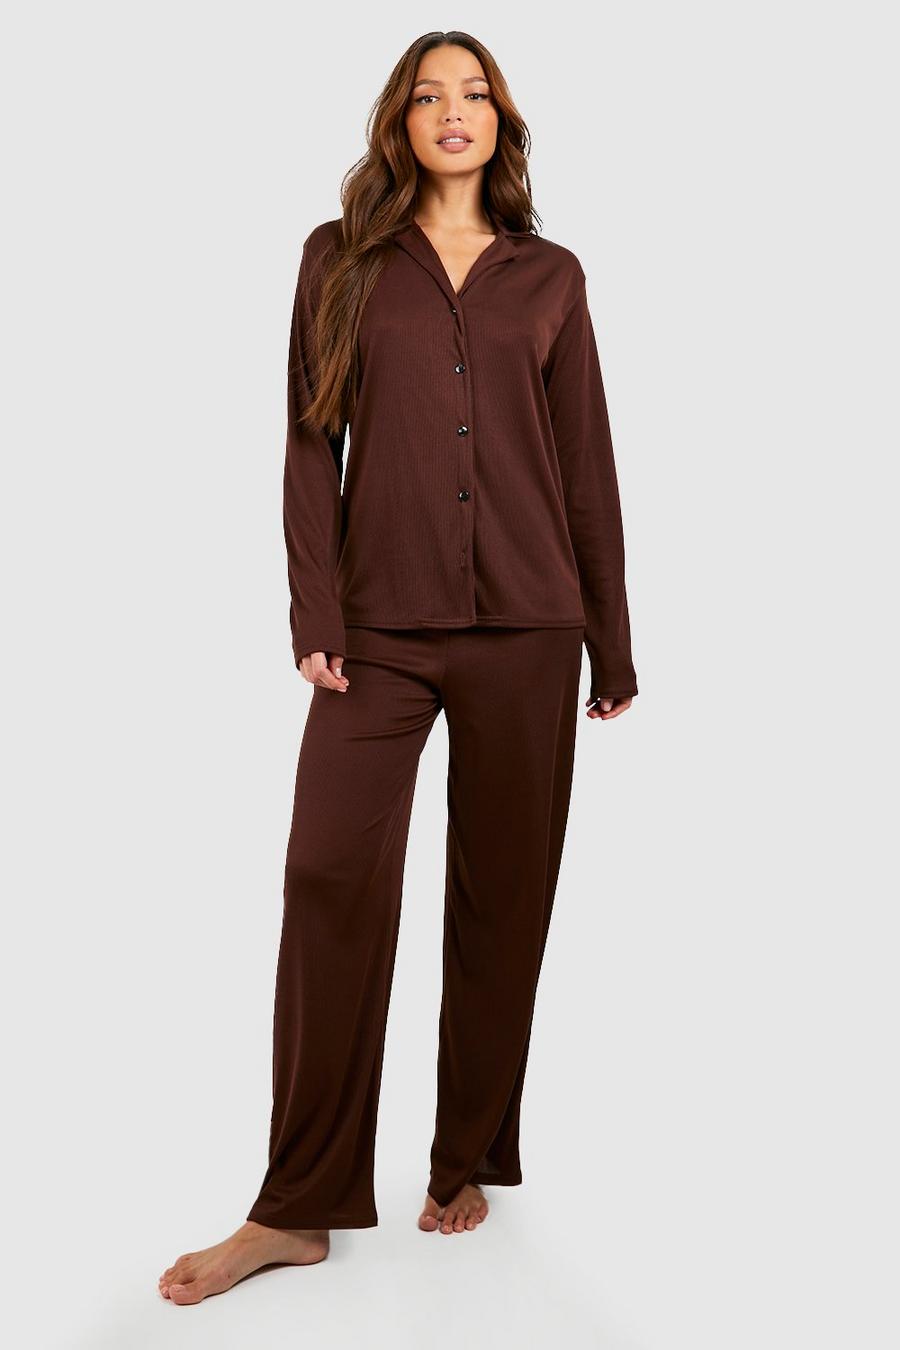 Chocolate Tall Rib Jersey Long Sleeve Pajama Shirt